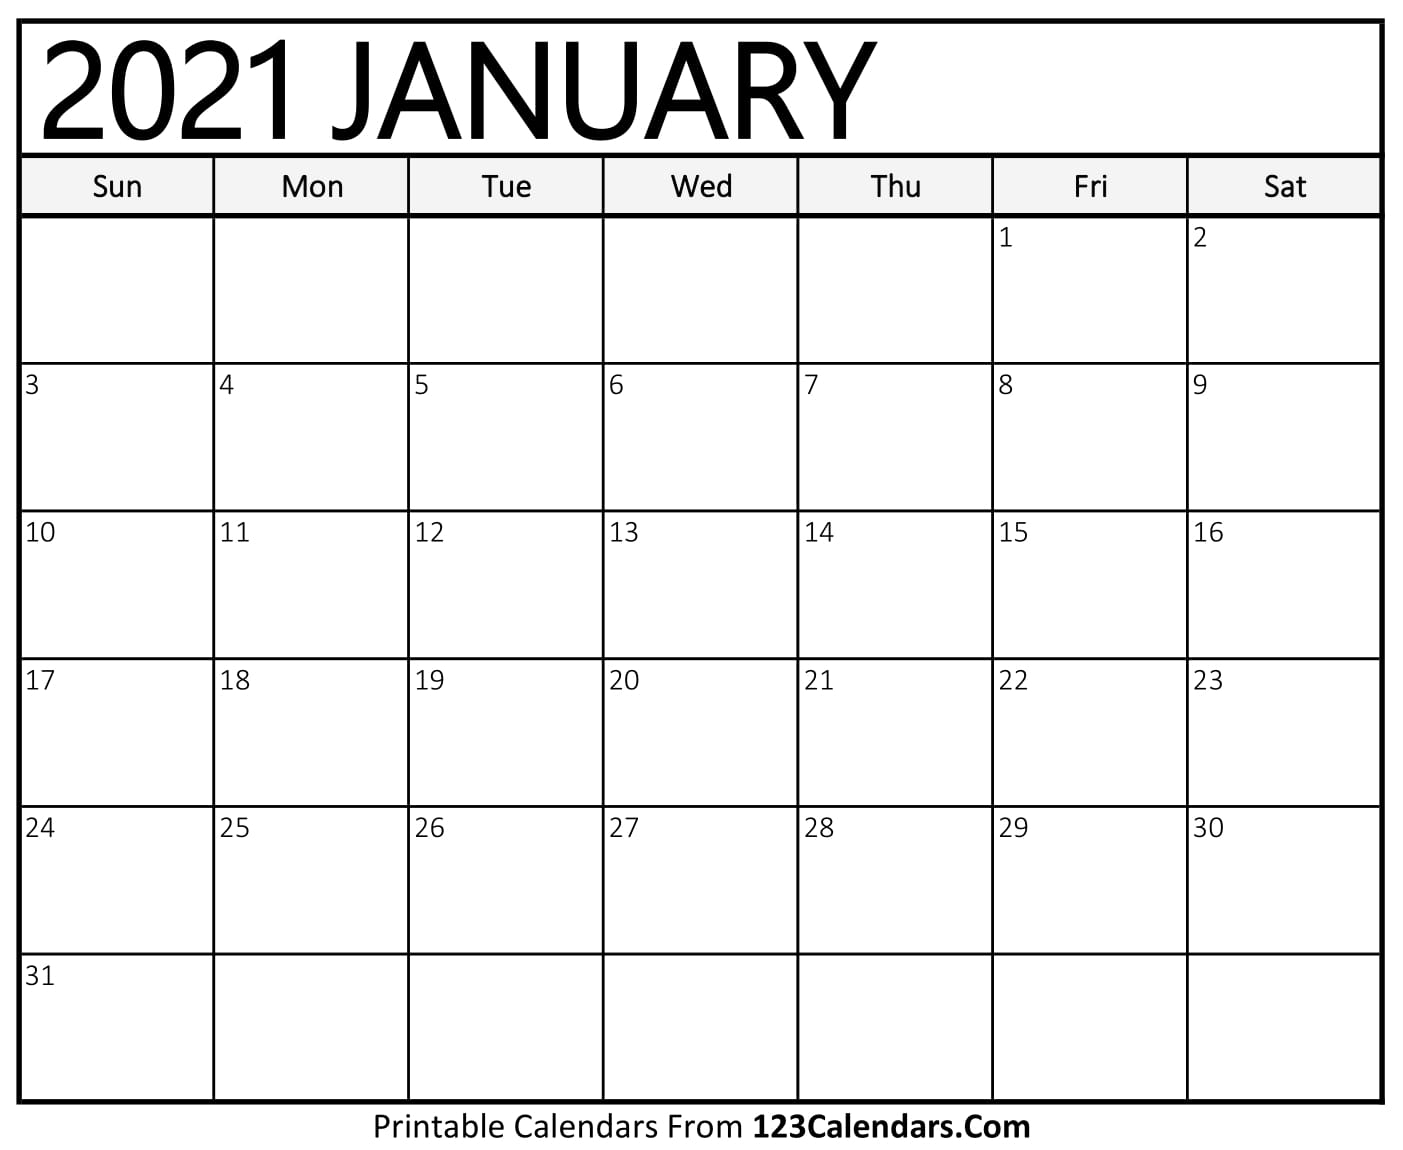 Free Printable Family Calendar 2021 | Free 2021 Printable